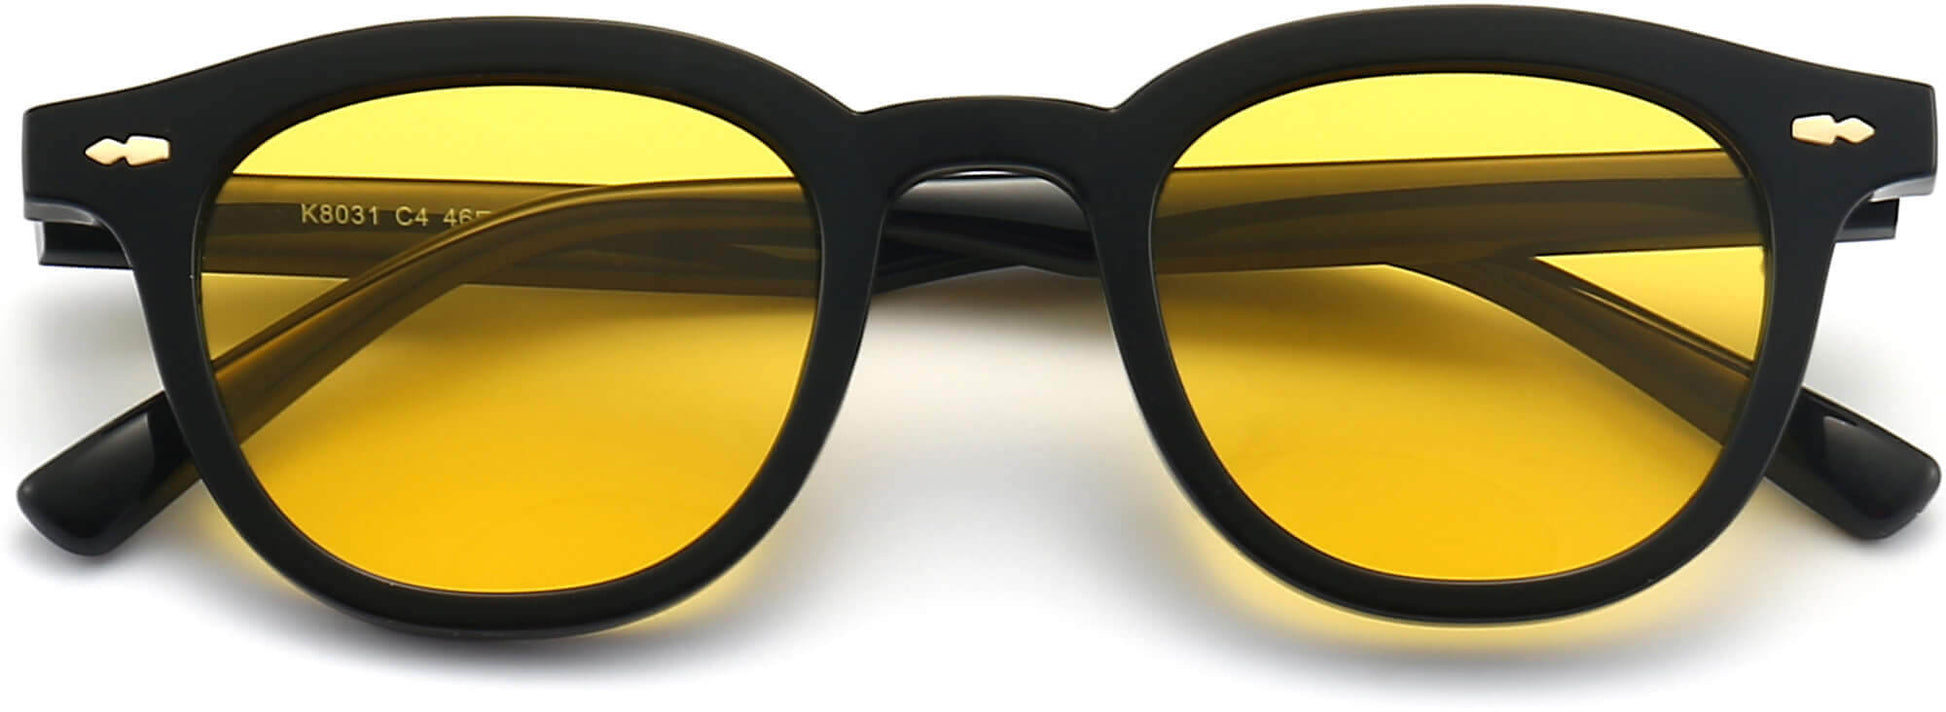 Jayce Black Plastic Sunglasses from ANRRI, closed view